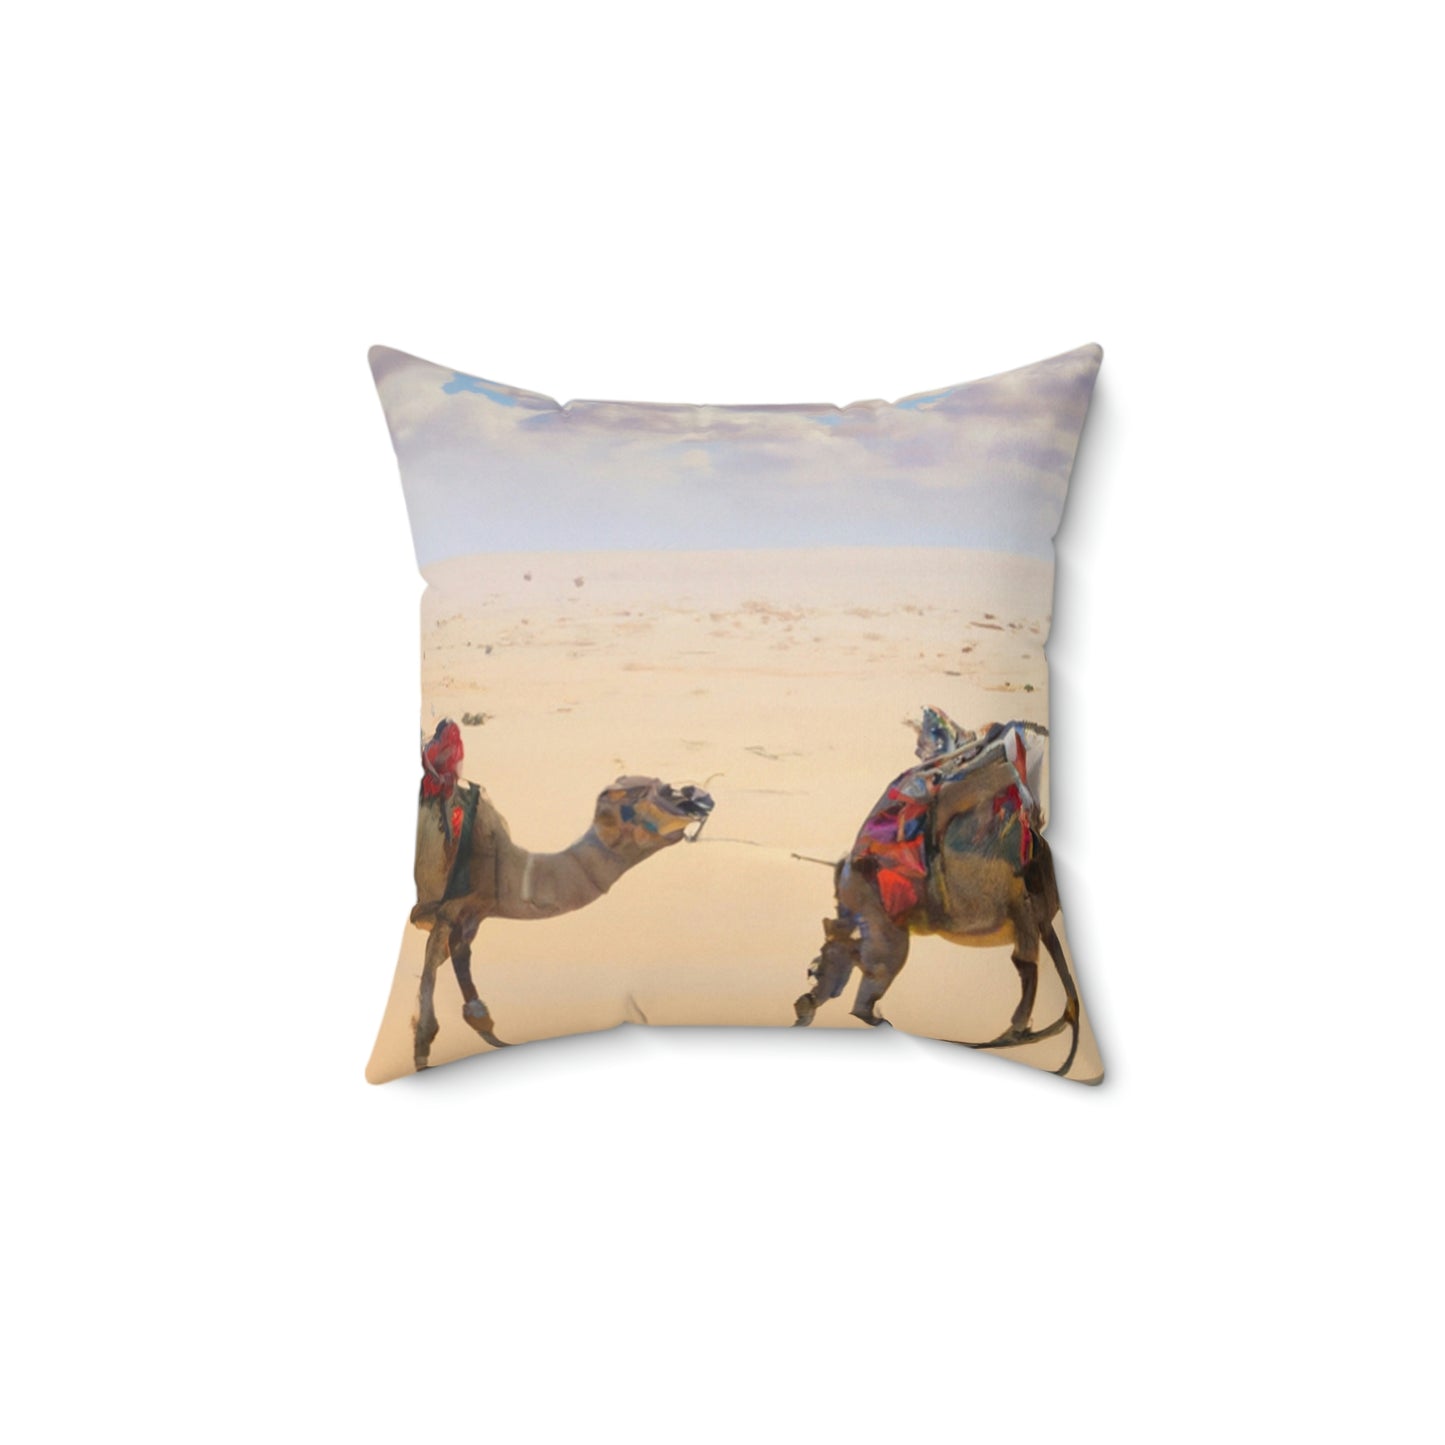 Spun Polyester Square Pillow - Camel Caravan